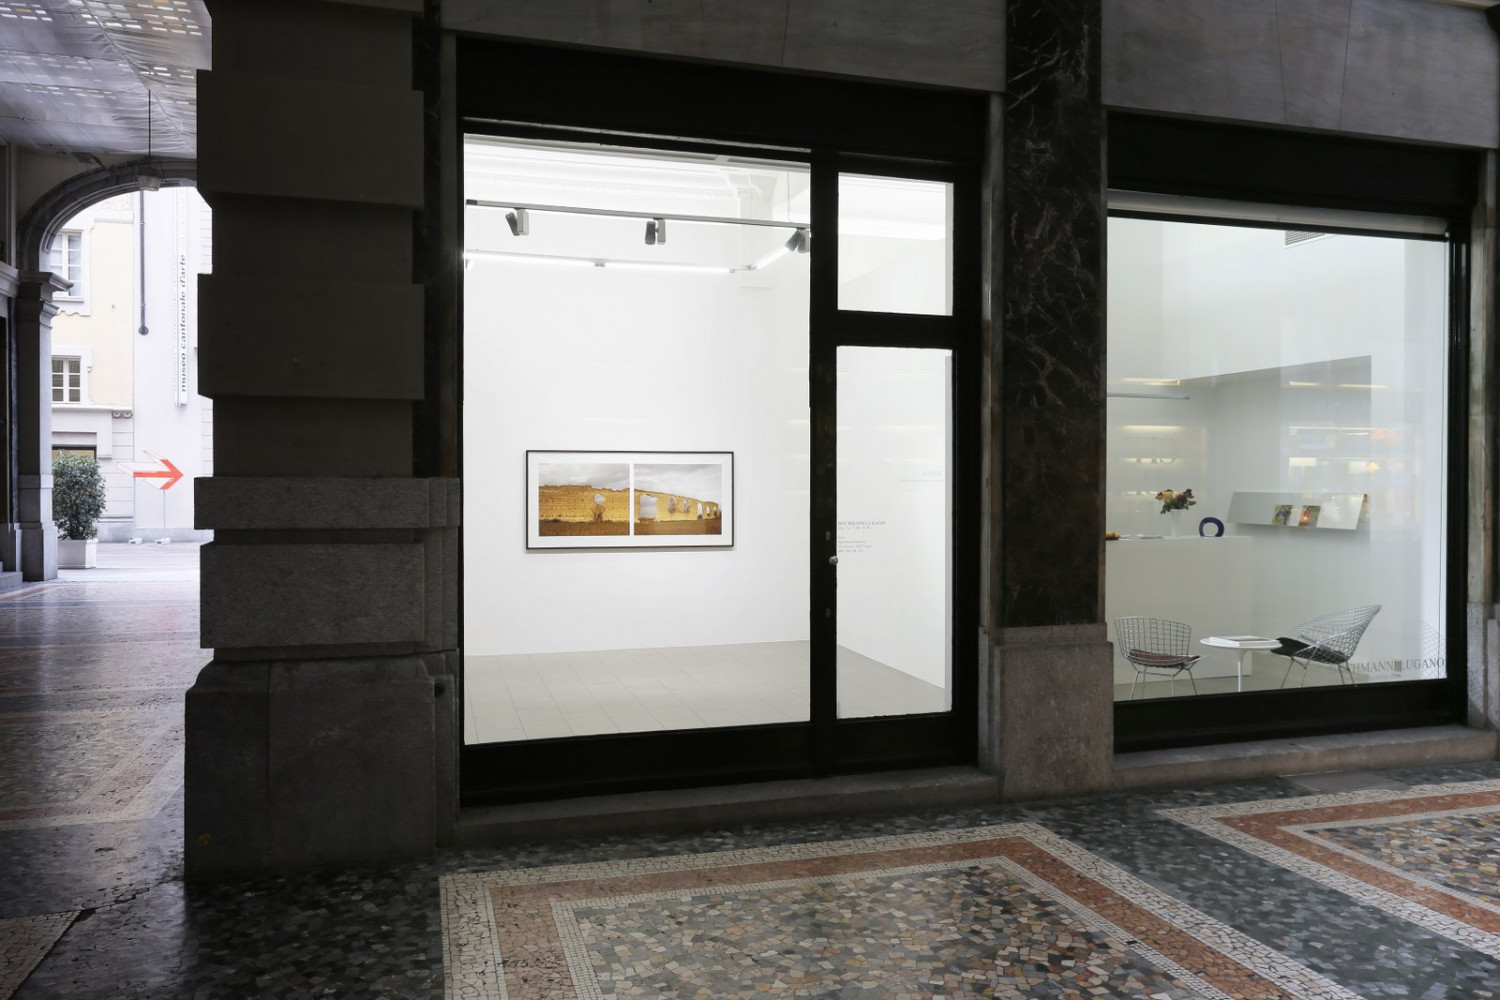 Joel Sternfeld, ‘Landscape?’, Installation view, Buchmann Lugano